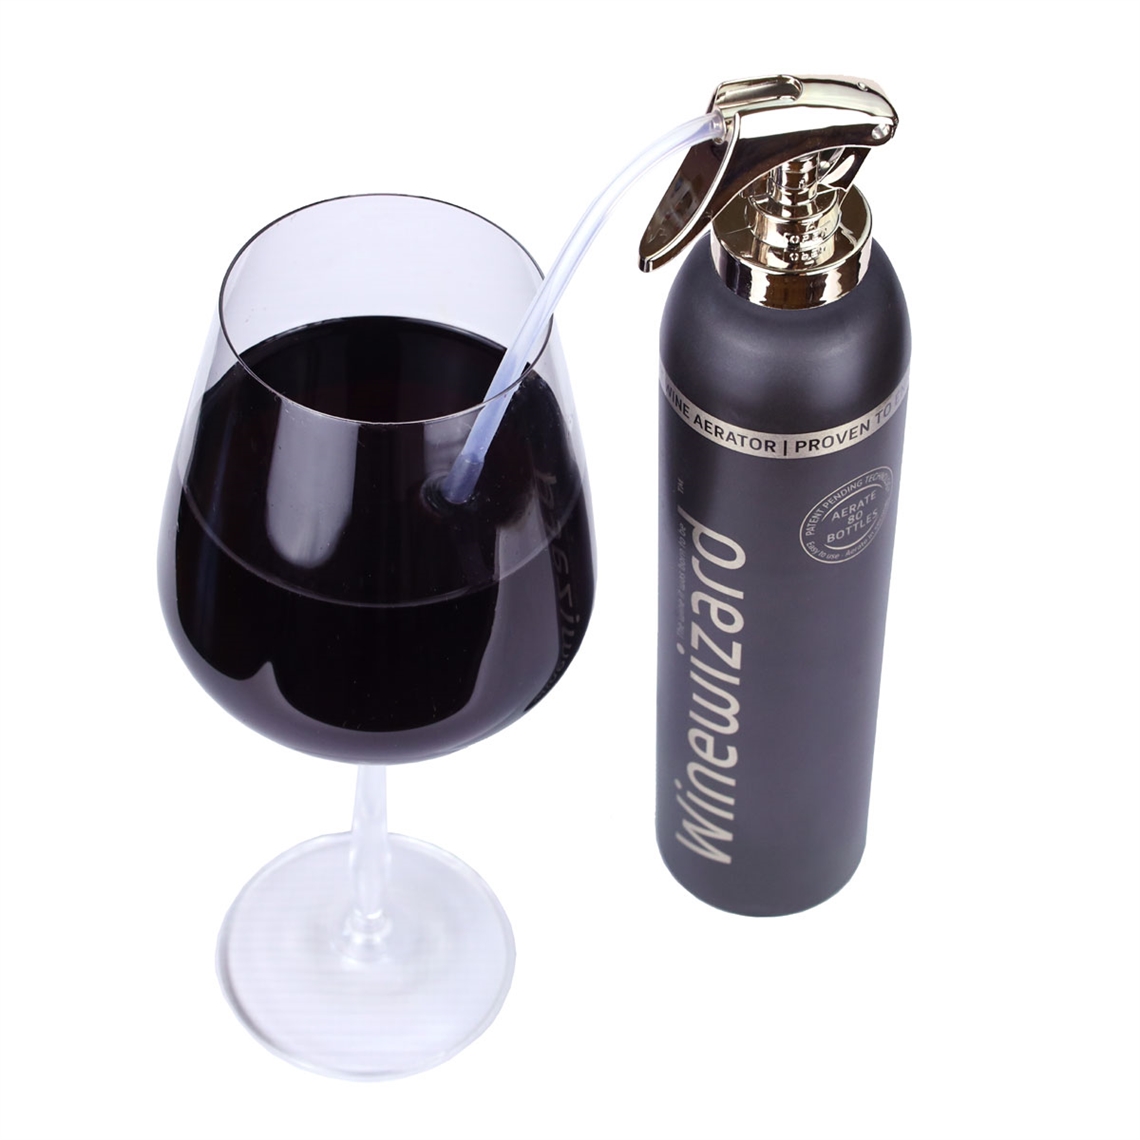 Winewizard - Smart 3-in-1 Wine Aerator - Refill